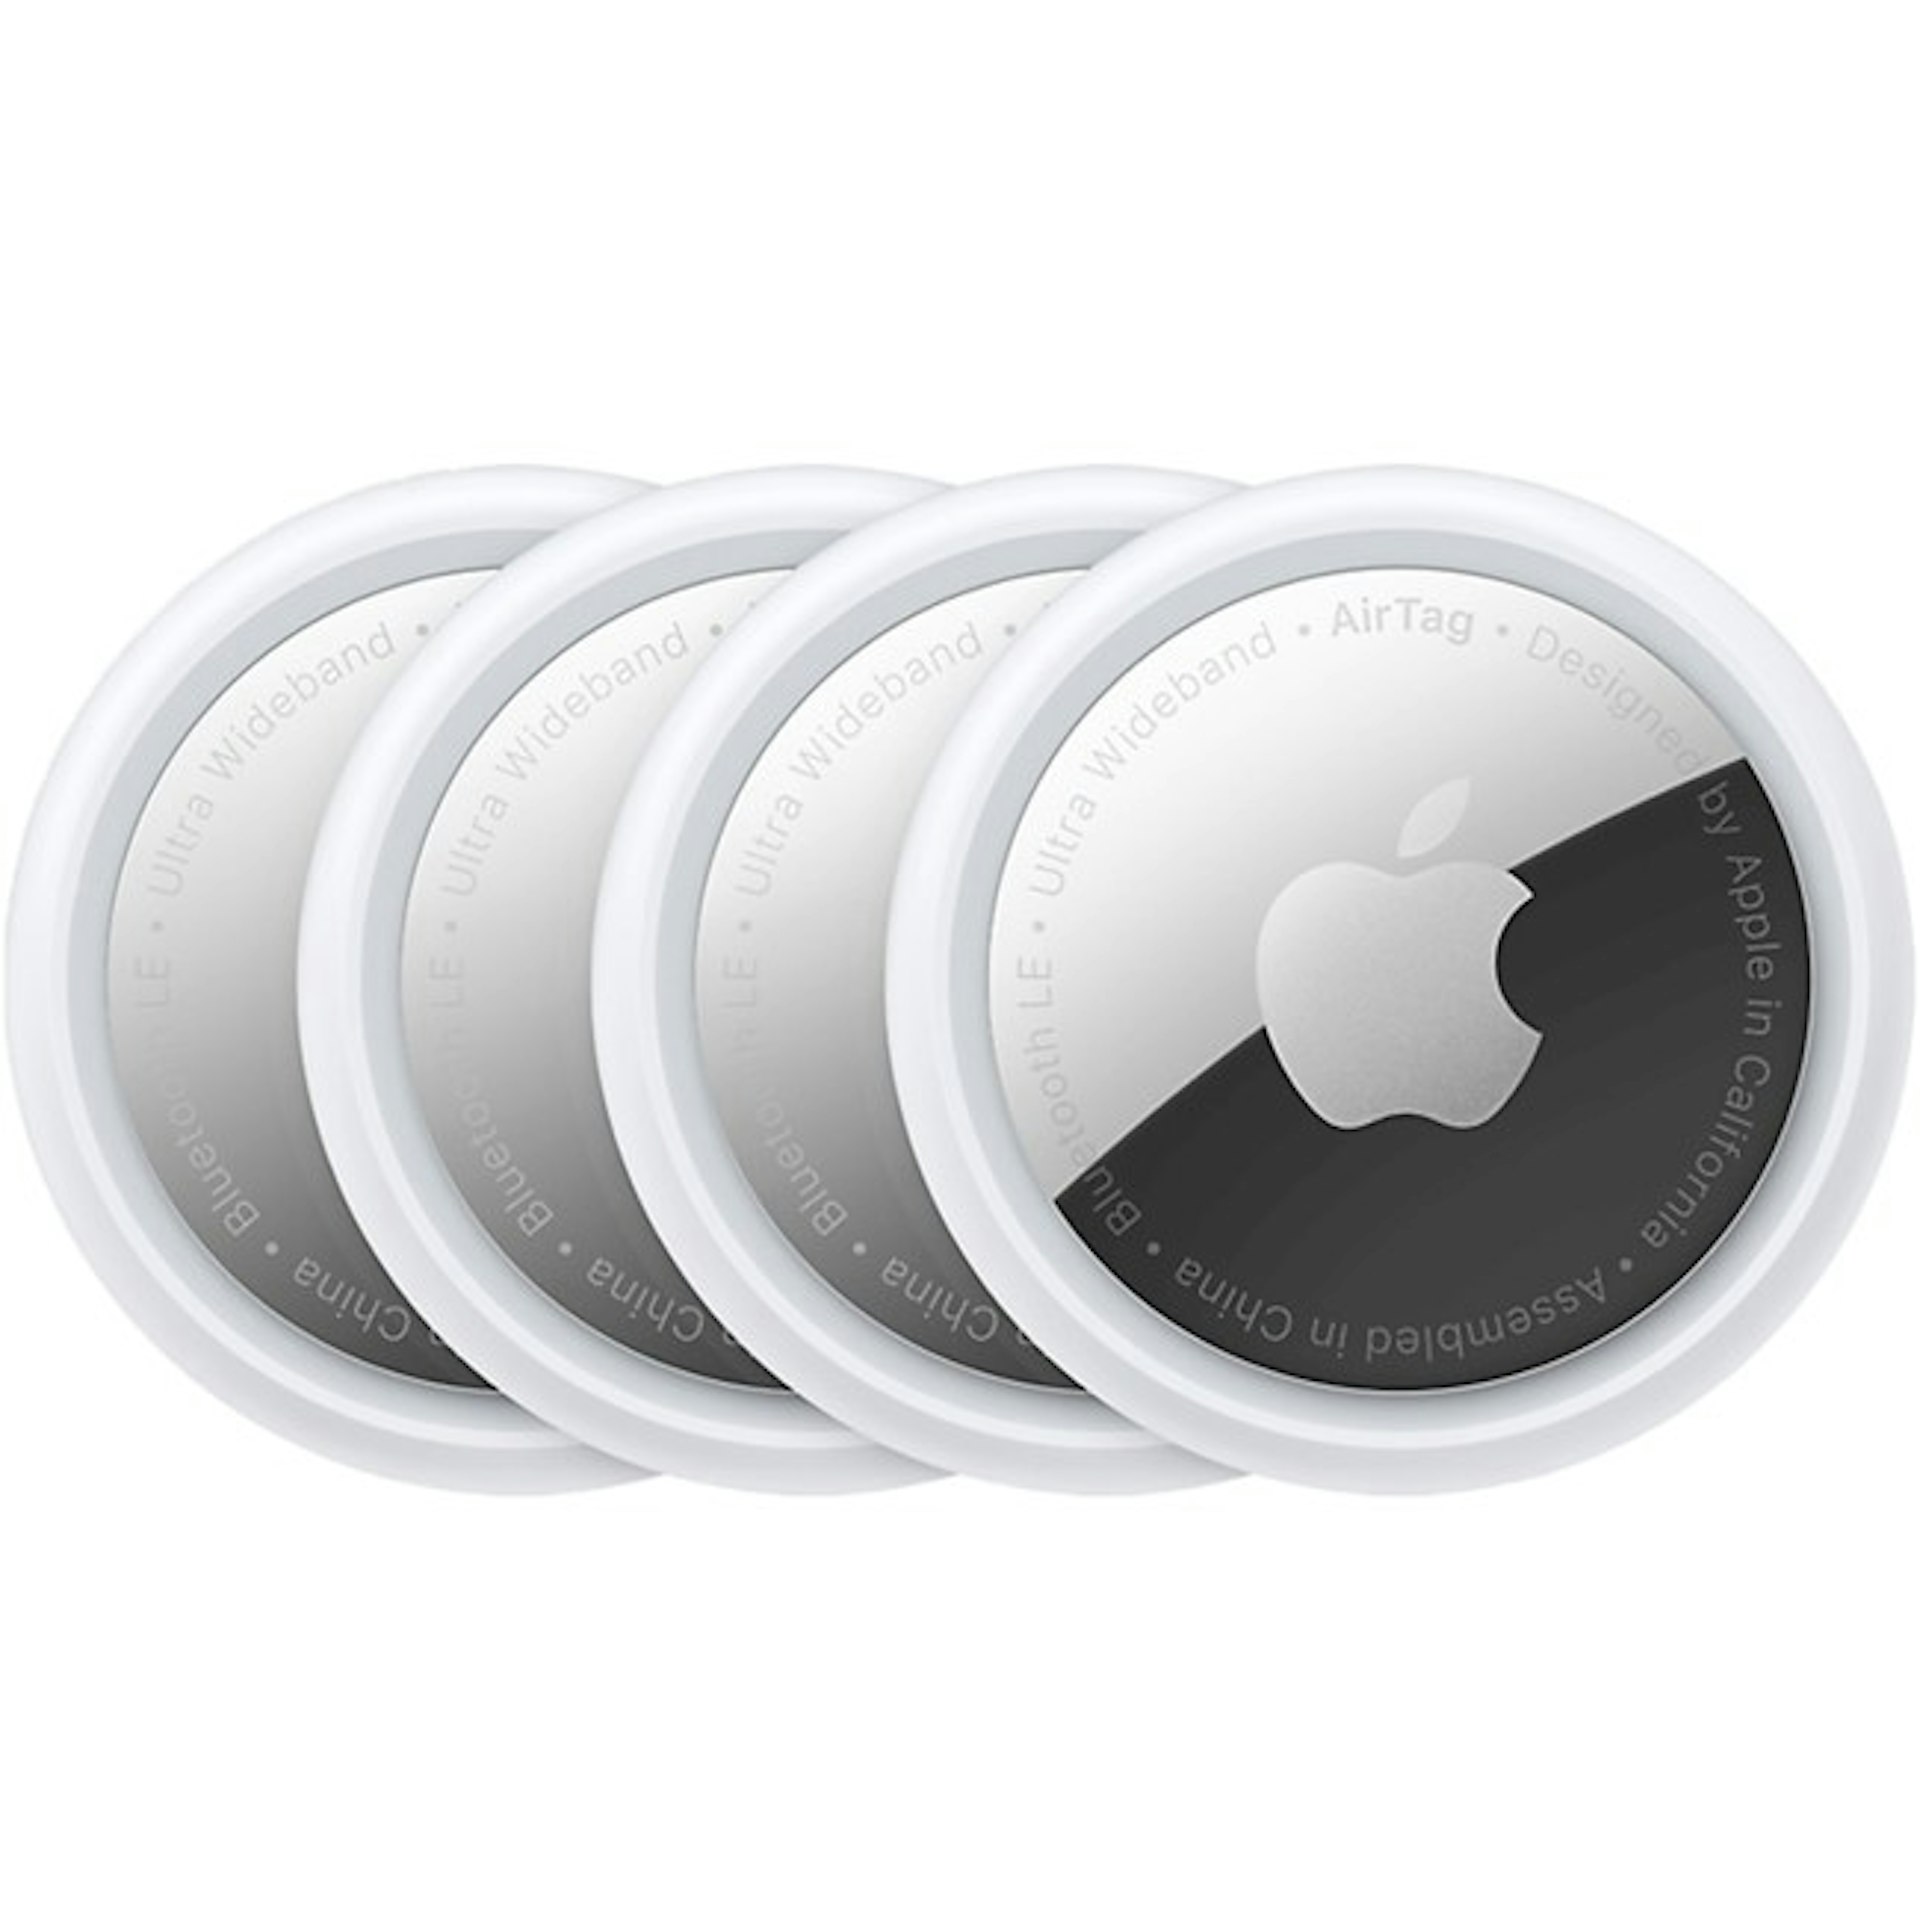 Apple Air Tags.jpg